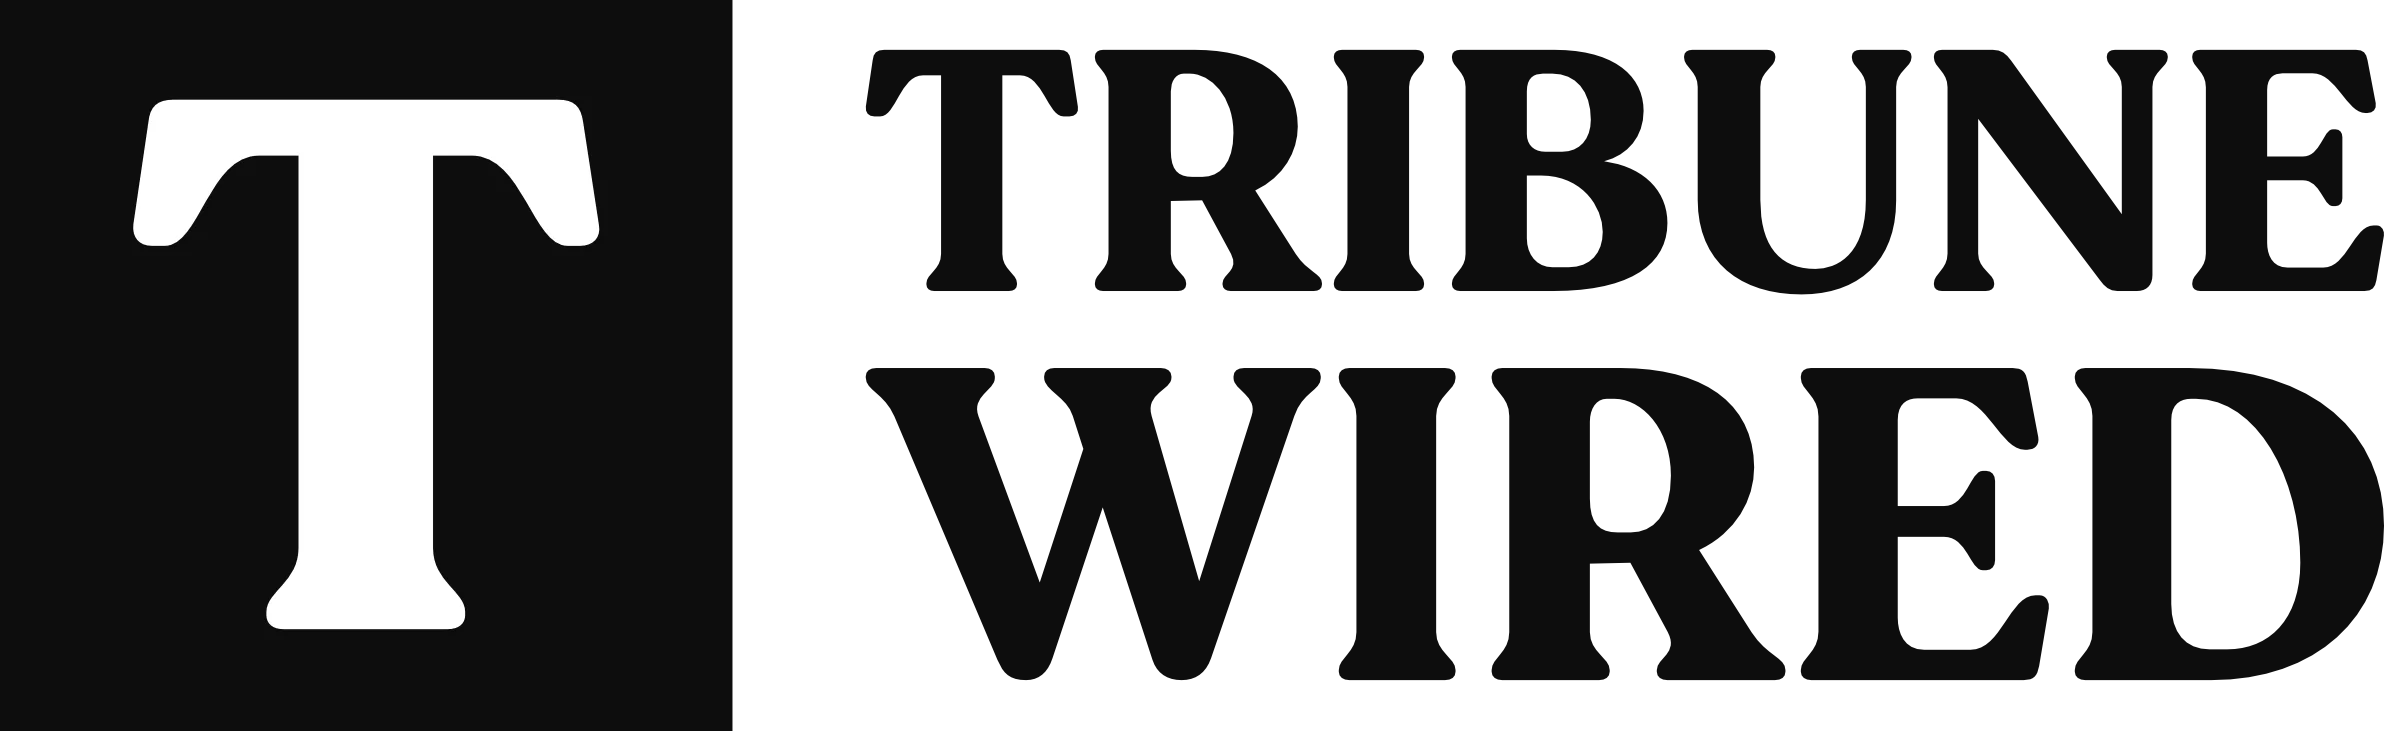 Tribune Wired